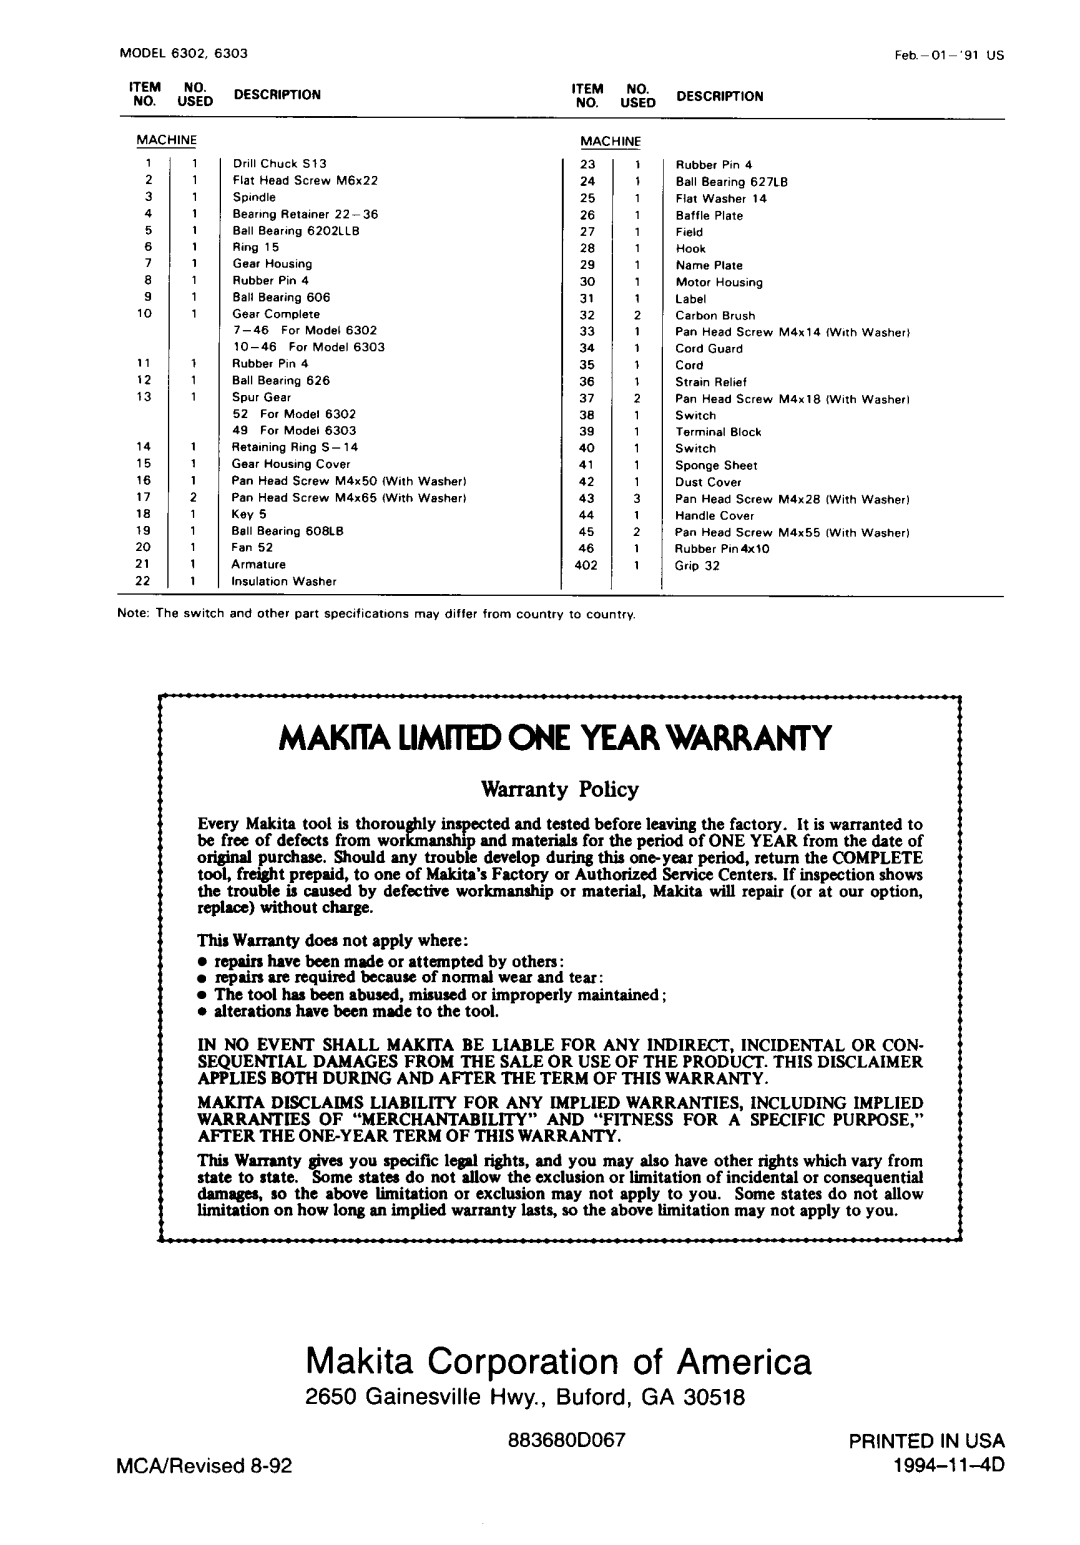 Makita 6303 Makita Corporation of America, MAKITA LIMllED ONE YEAR WARRANTY, warranty Policy, MCNRevised, 883680D067 